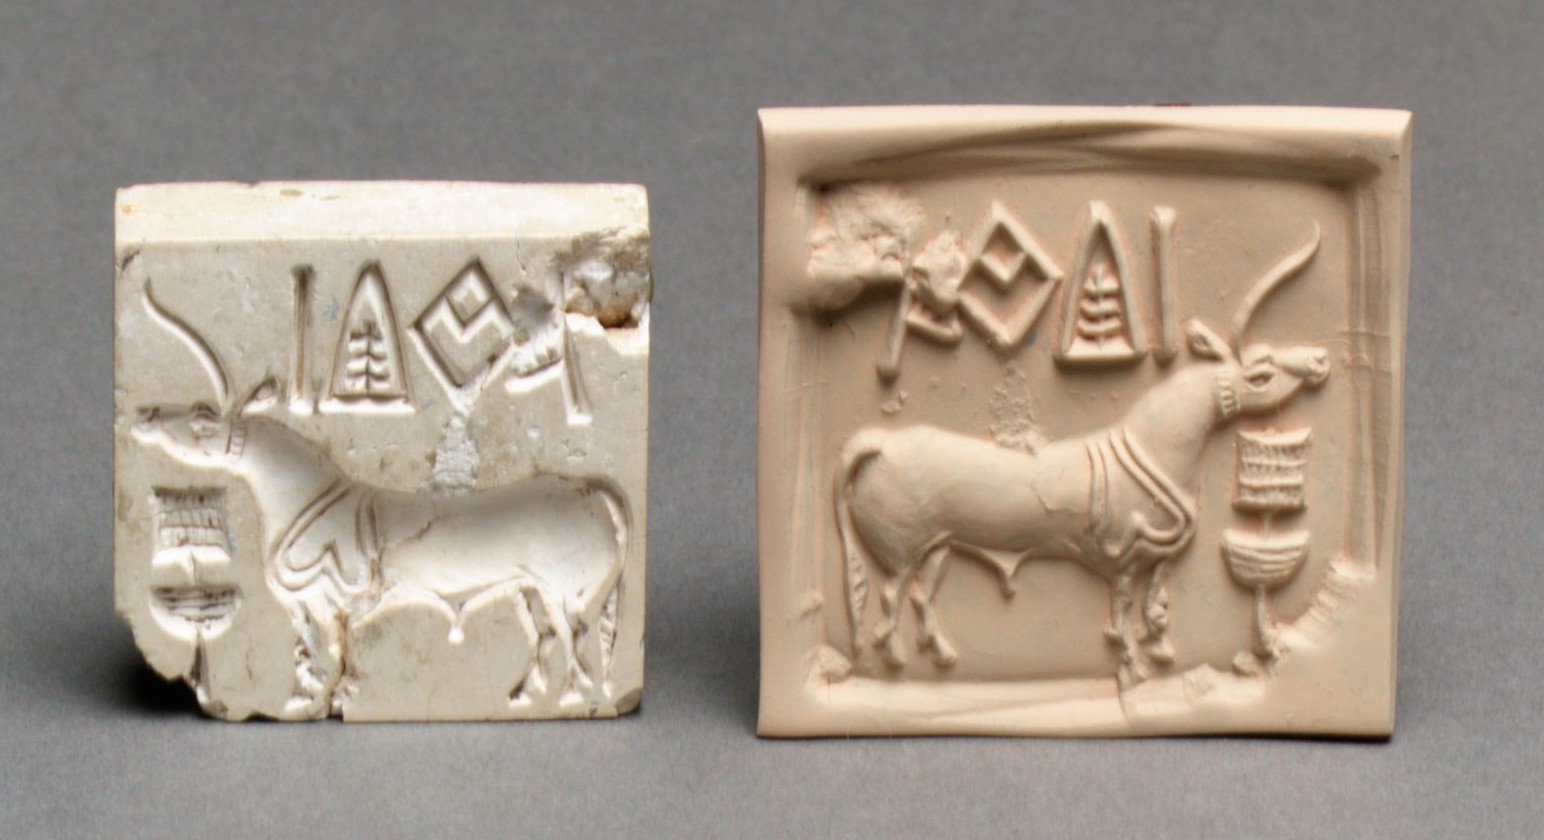 Stamp seal and modern impression: unicorn and incense burner (?), c. 2600–1900 B.C.E. (Mature Harappan), burnt steatite, 3.8 x 3.8 x 1 cm (The Metropolitan Museum of Art, New York)